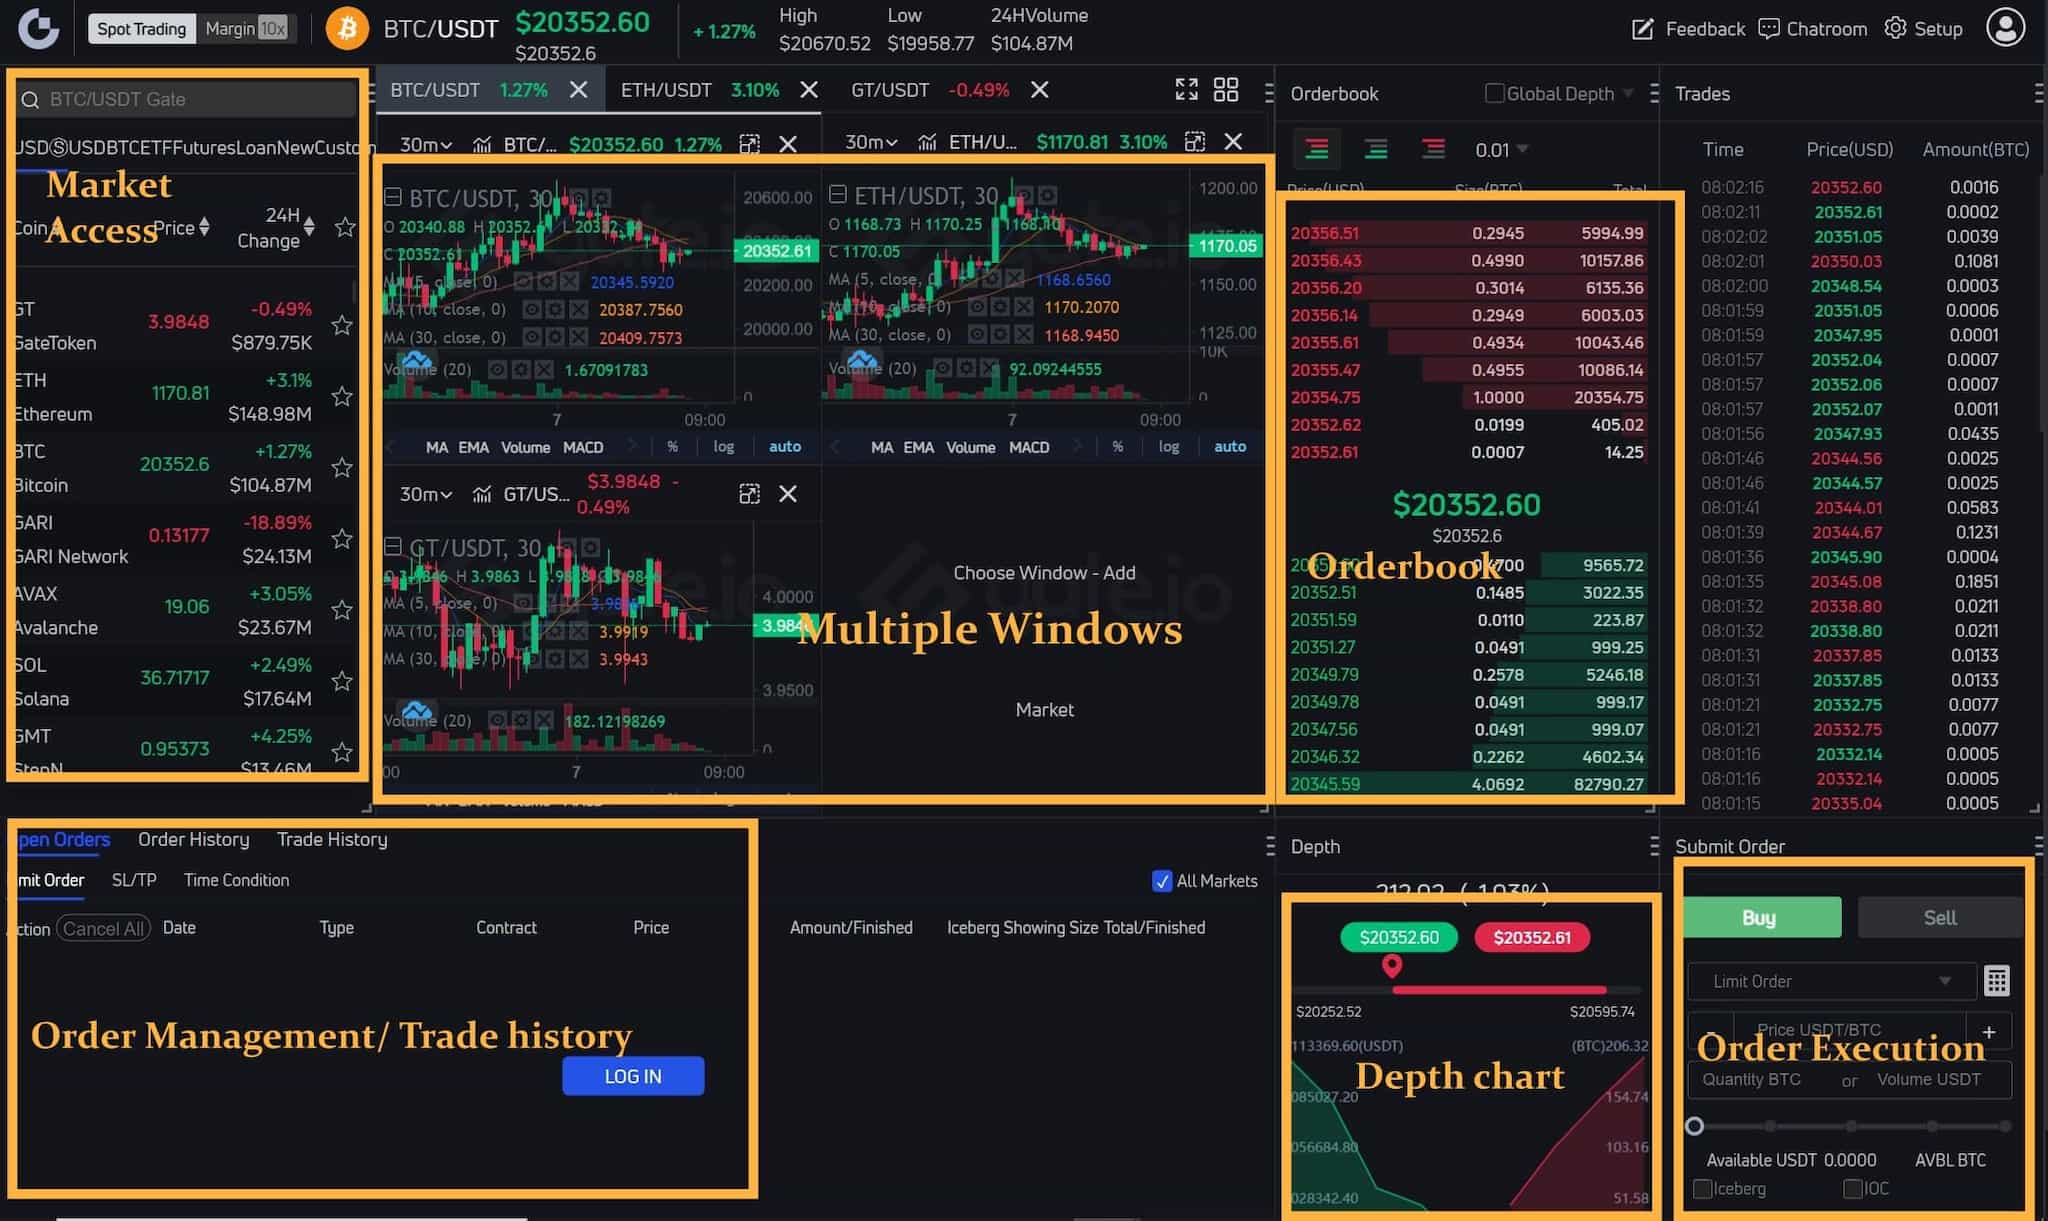 trading screen